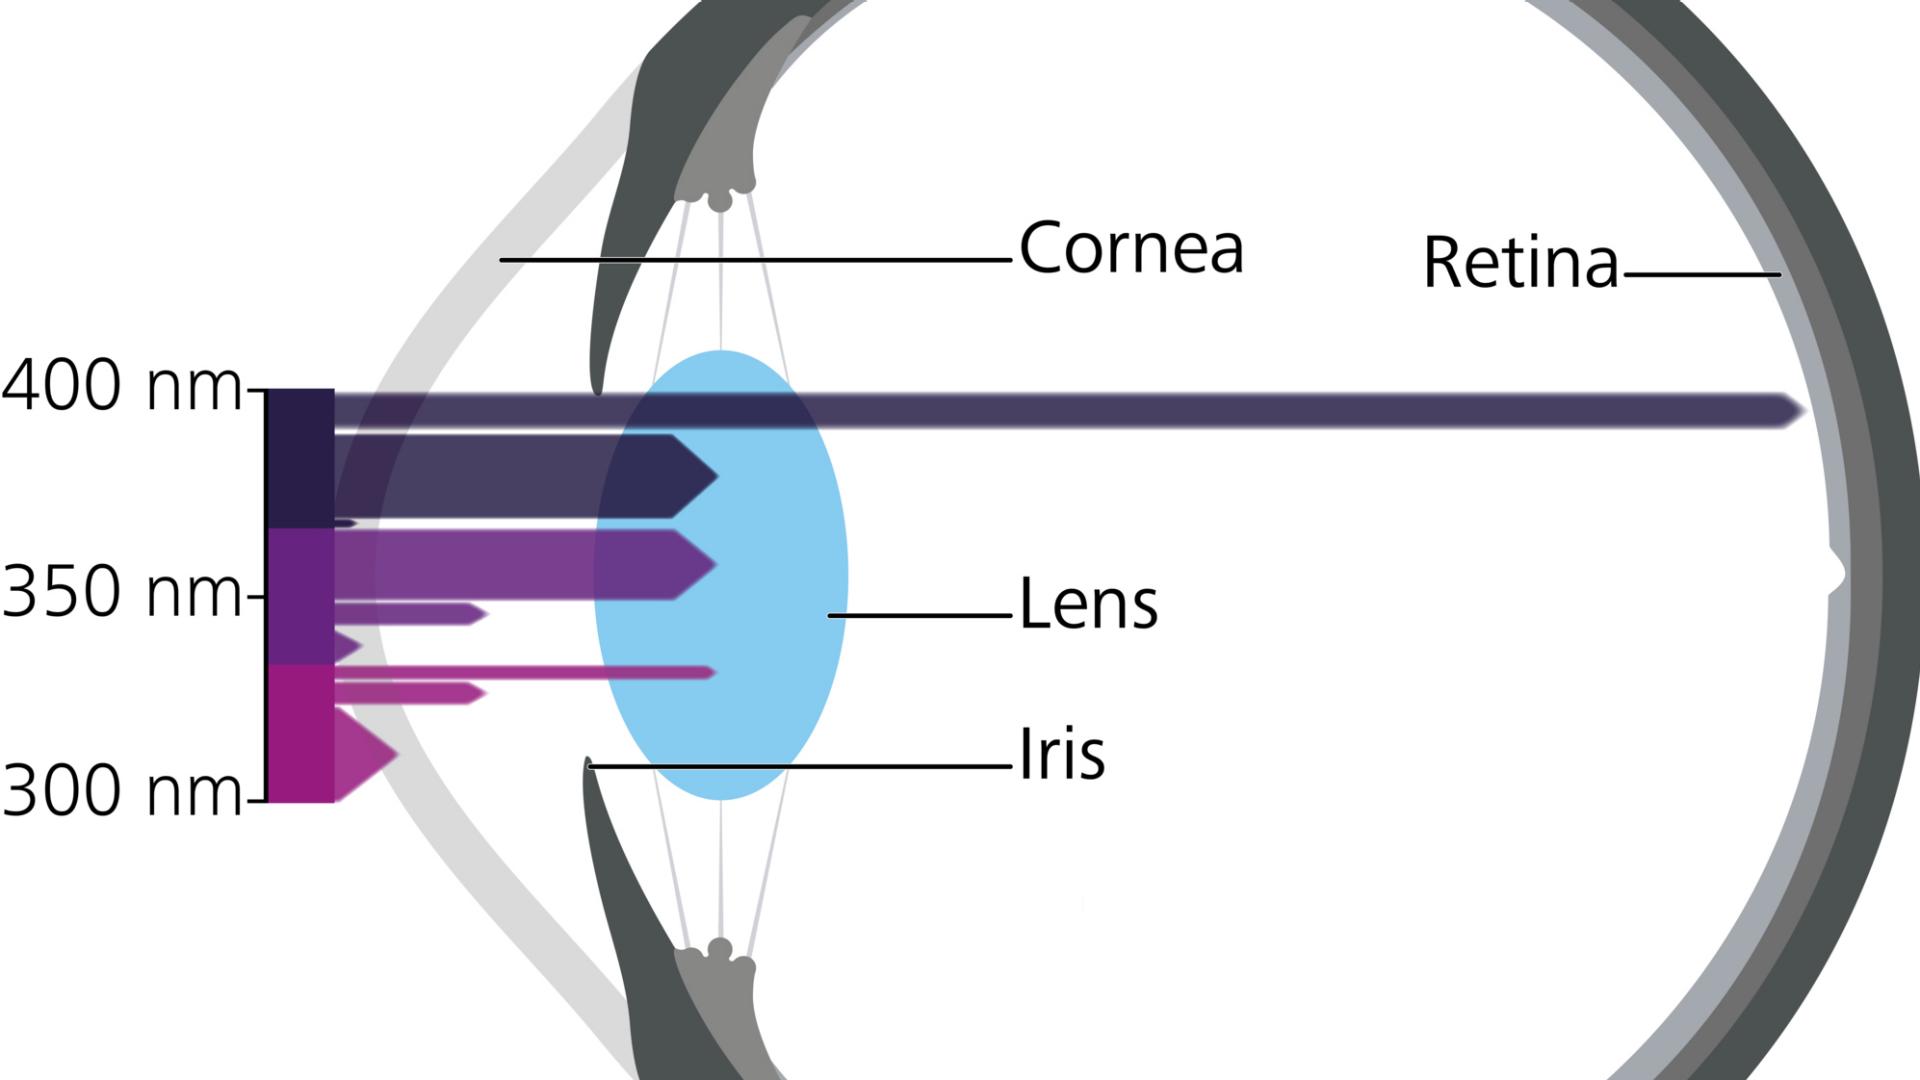 Diagram of the penetration depth in the eye based on different UVR wavelengths